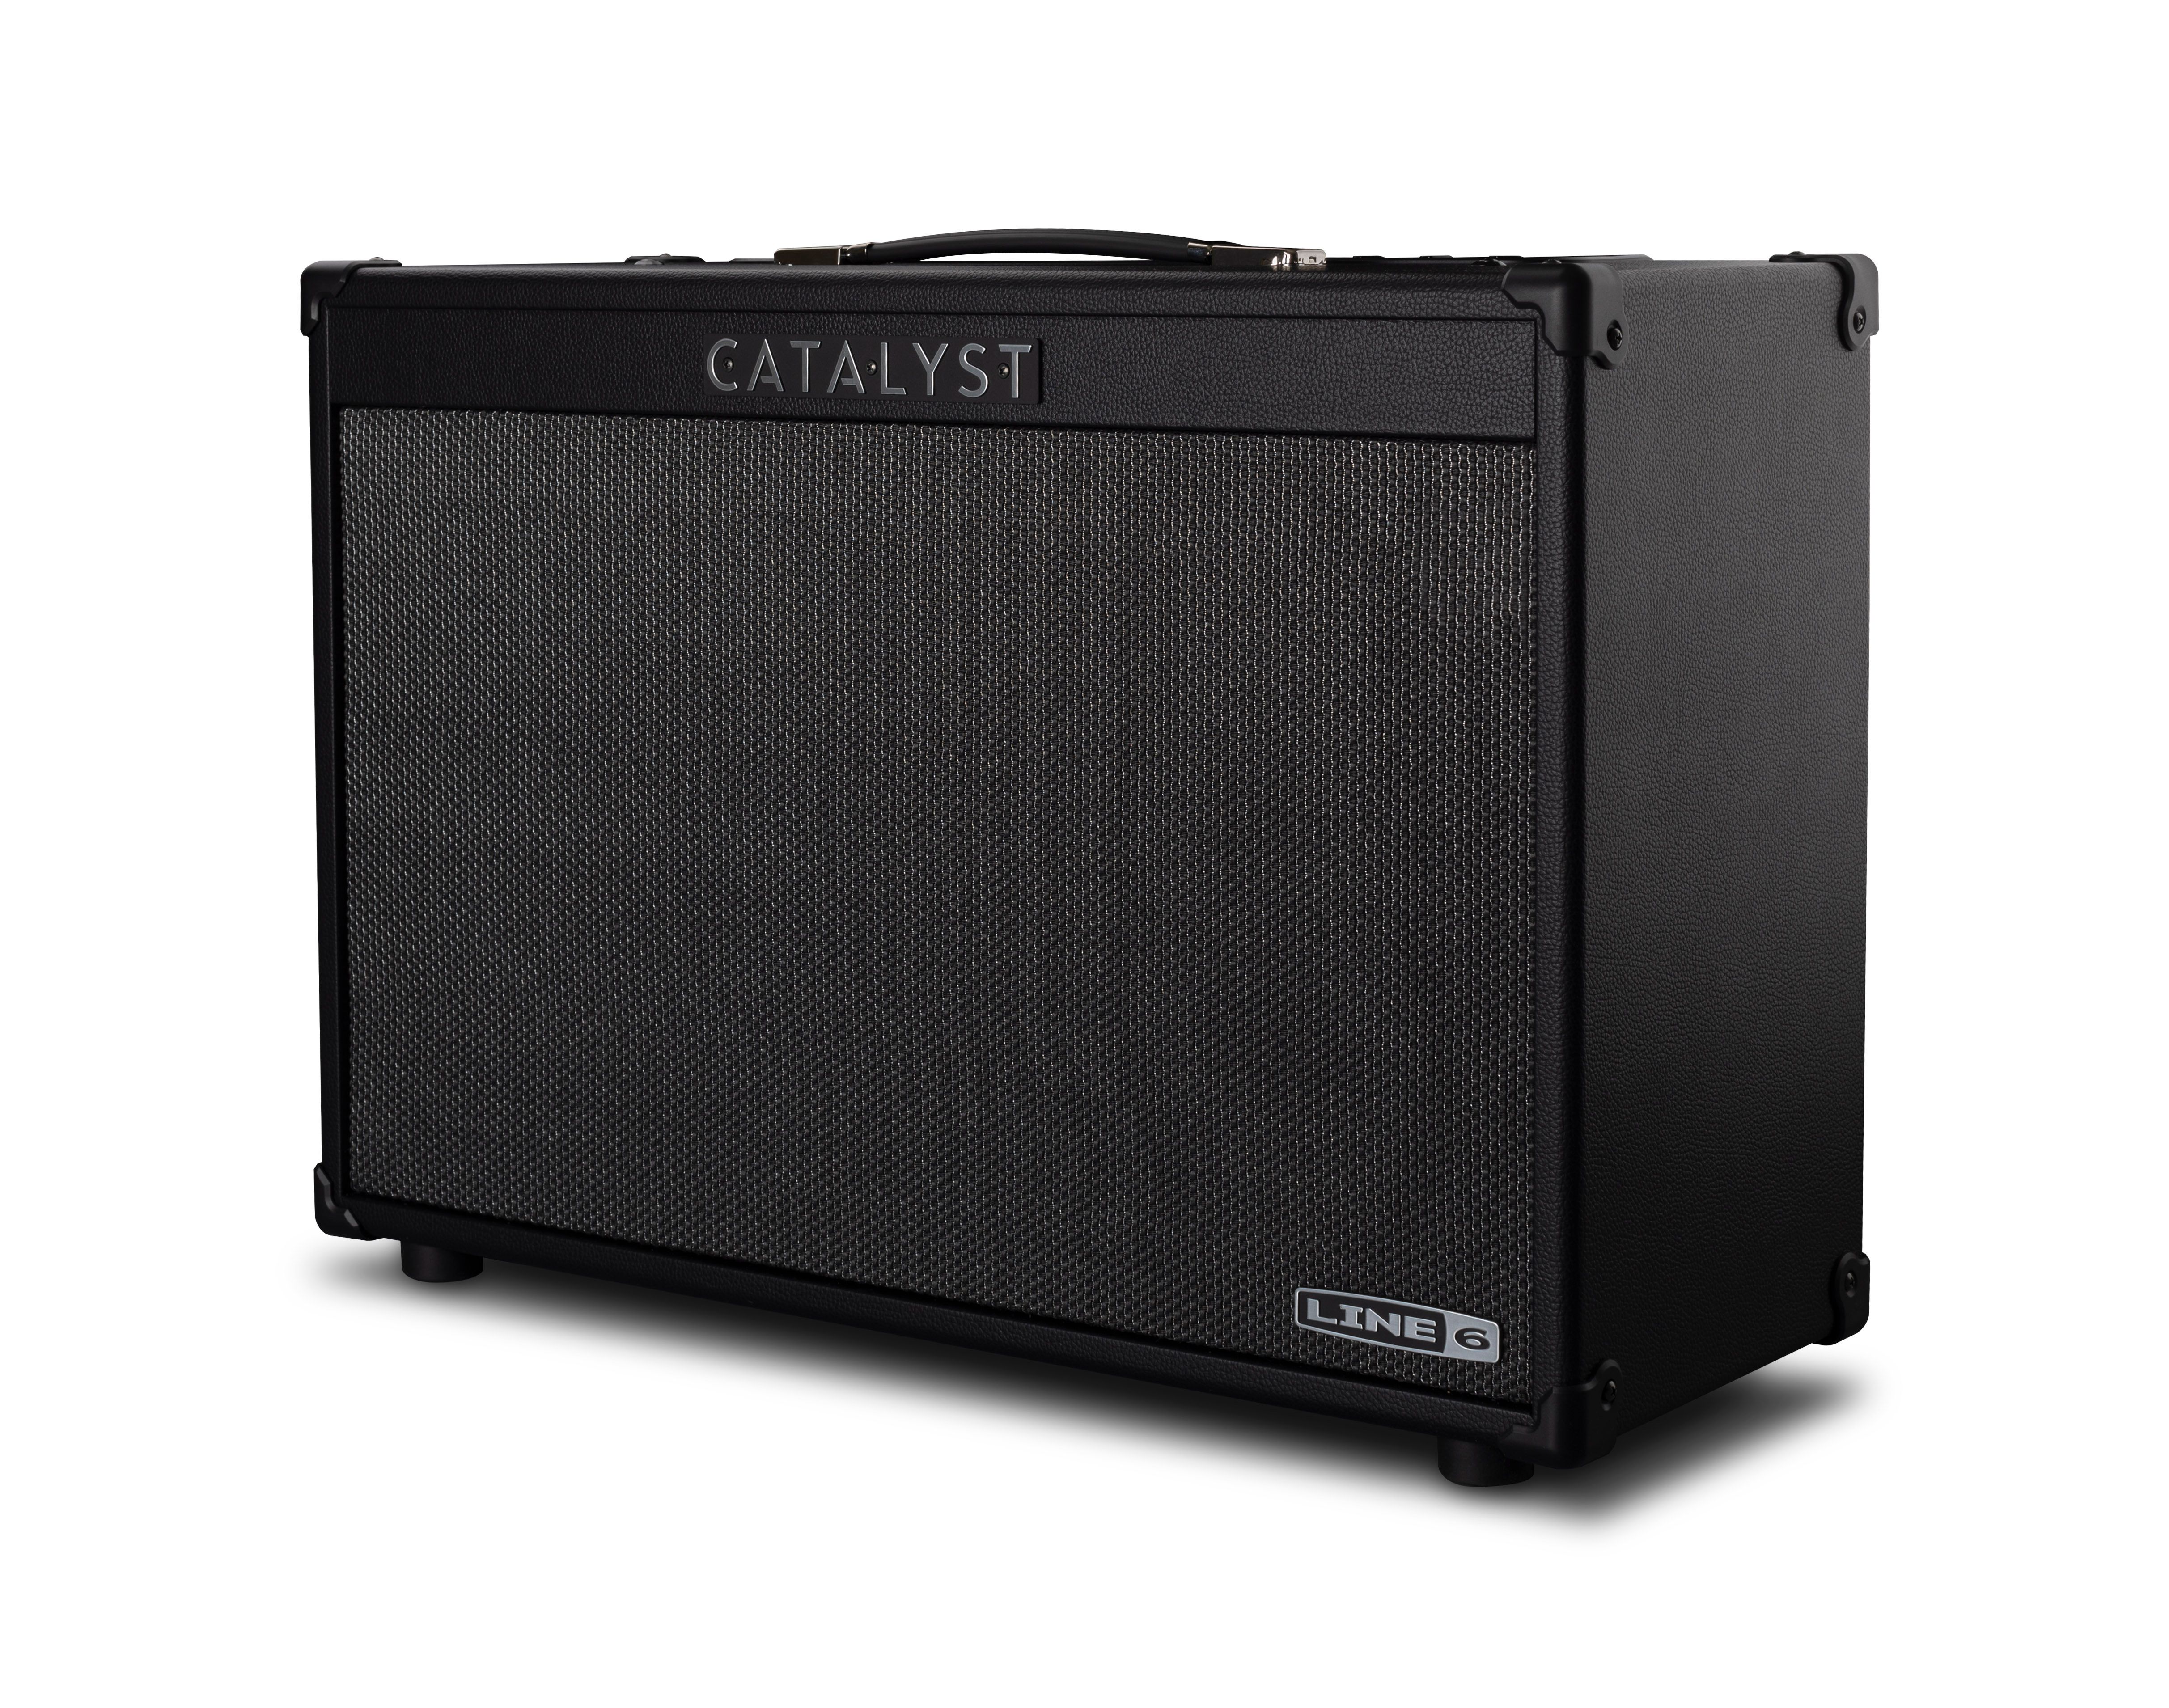 Line 6 Catalyst Combo 200w 2x12 - Combo amplificador para guitarra eléctrica - Variation 1